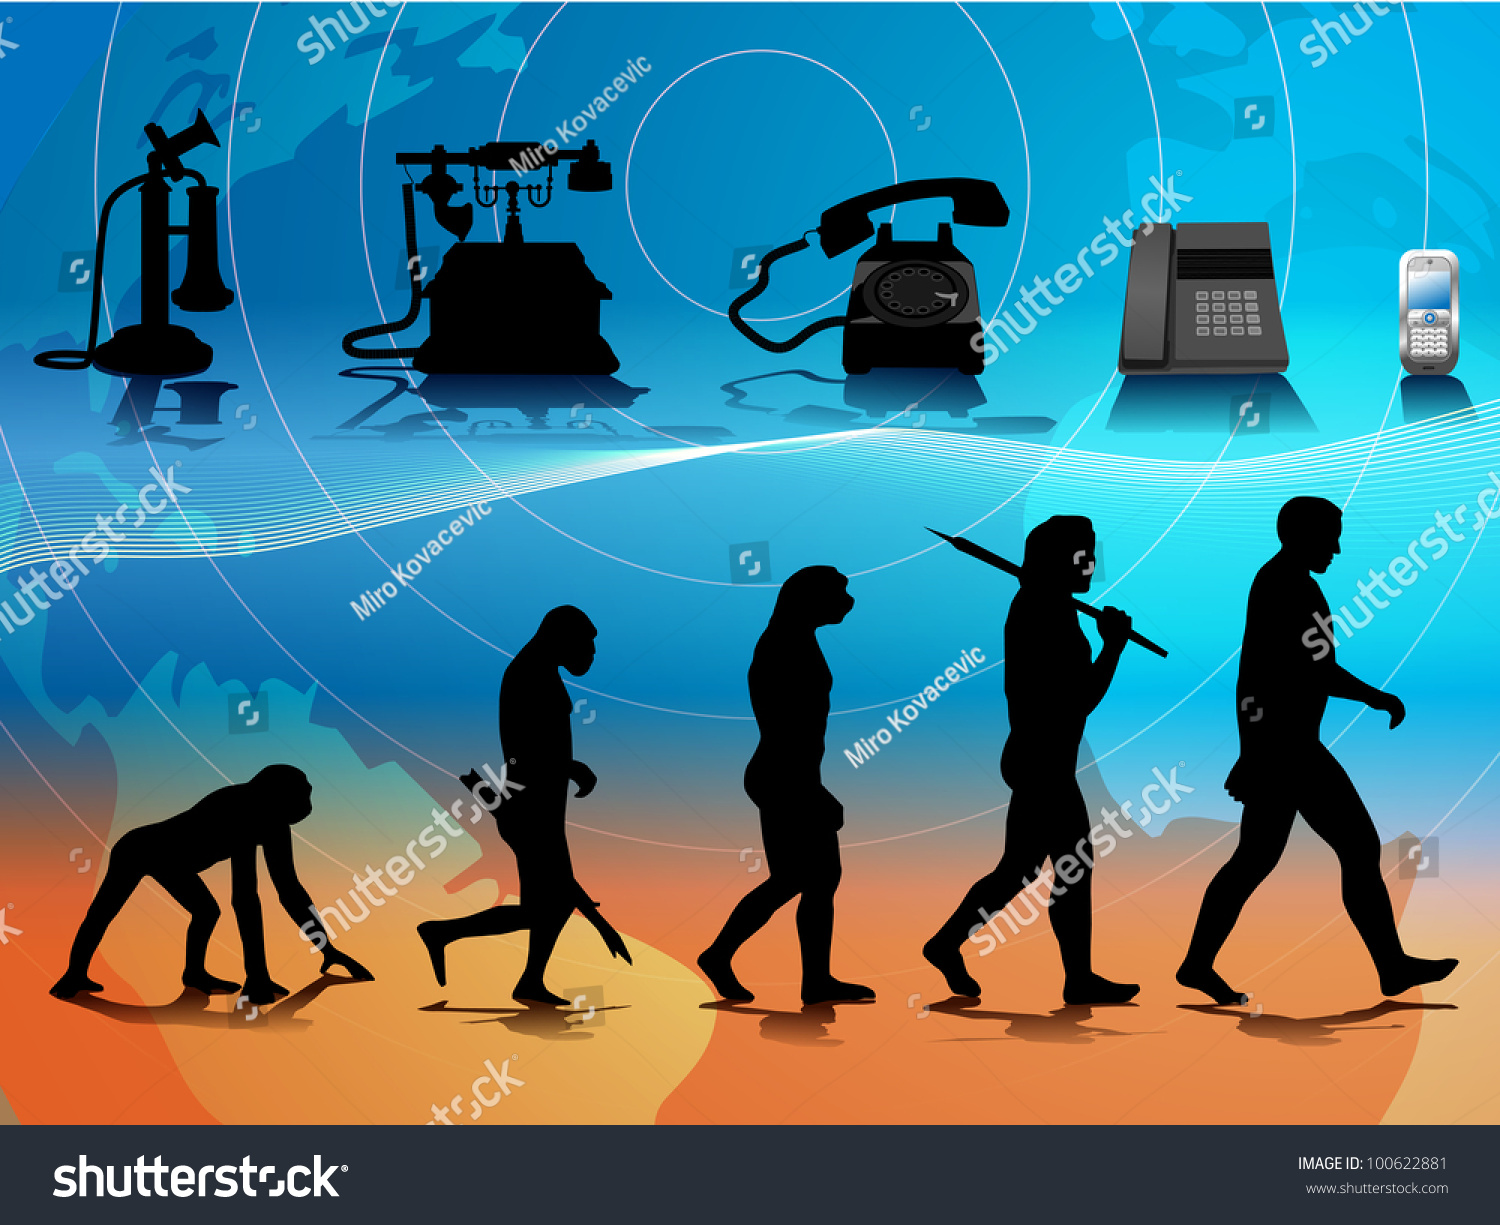 Прогресс коммуникаций. Эволюция коммуникации. Эволюция технологий человечества. Эволюция средств коммуникации. Эволюция телефонов.